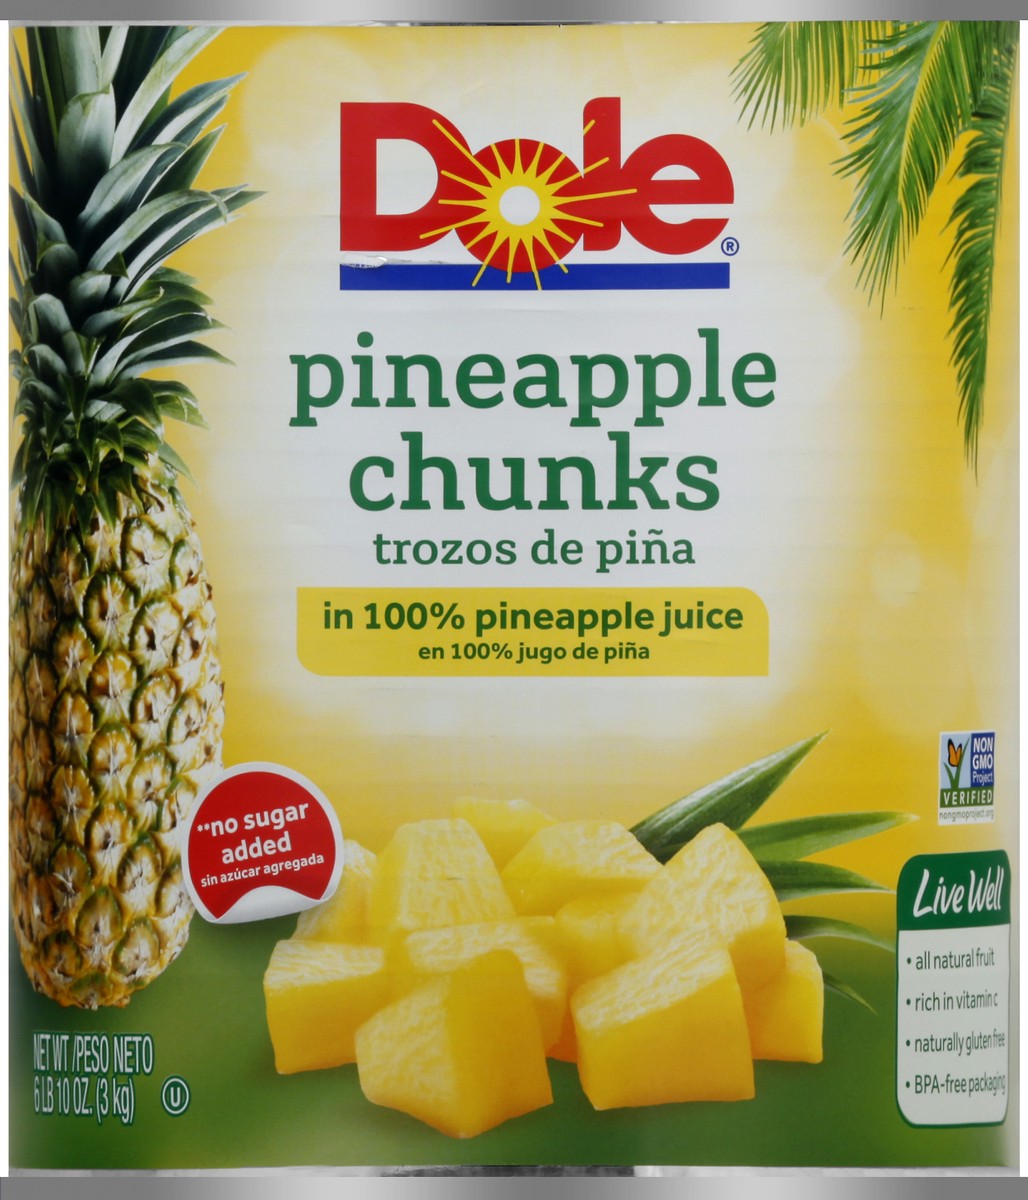 Dole Frozen Pineapple Chunks